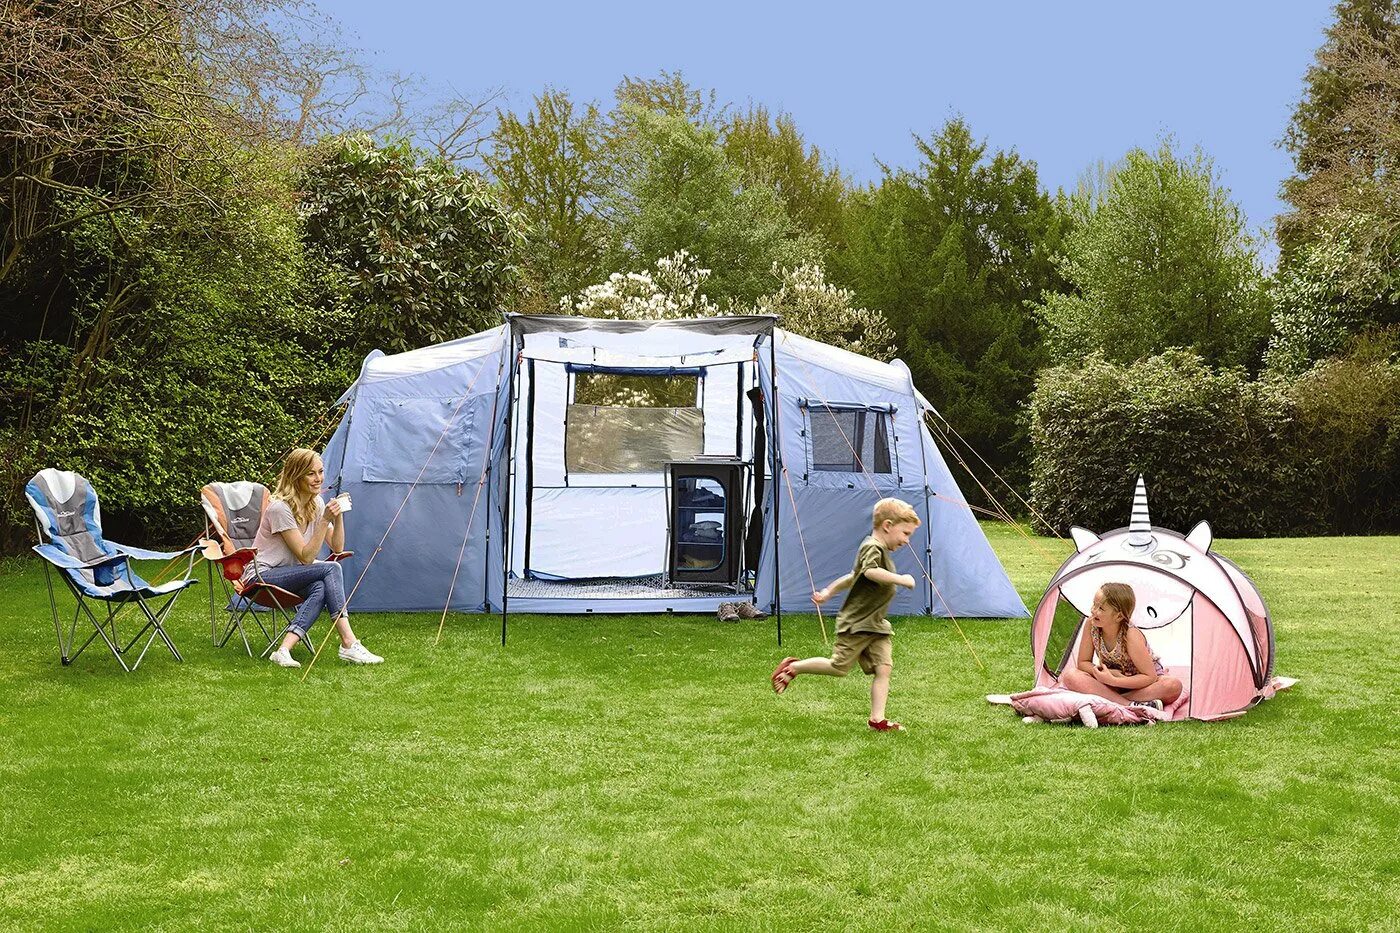 When we go camping. Палатка Camping Tent. Outdoor кемпинг. Семейный кемпинг. Семья в палатке.